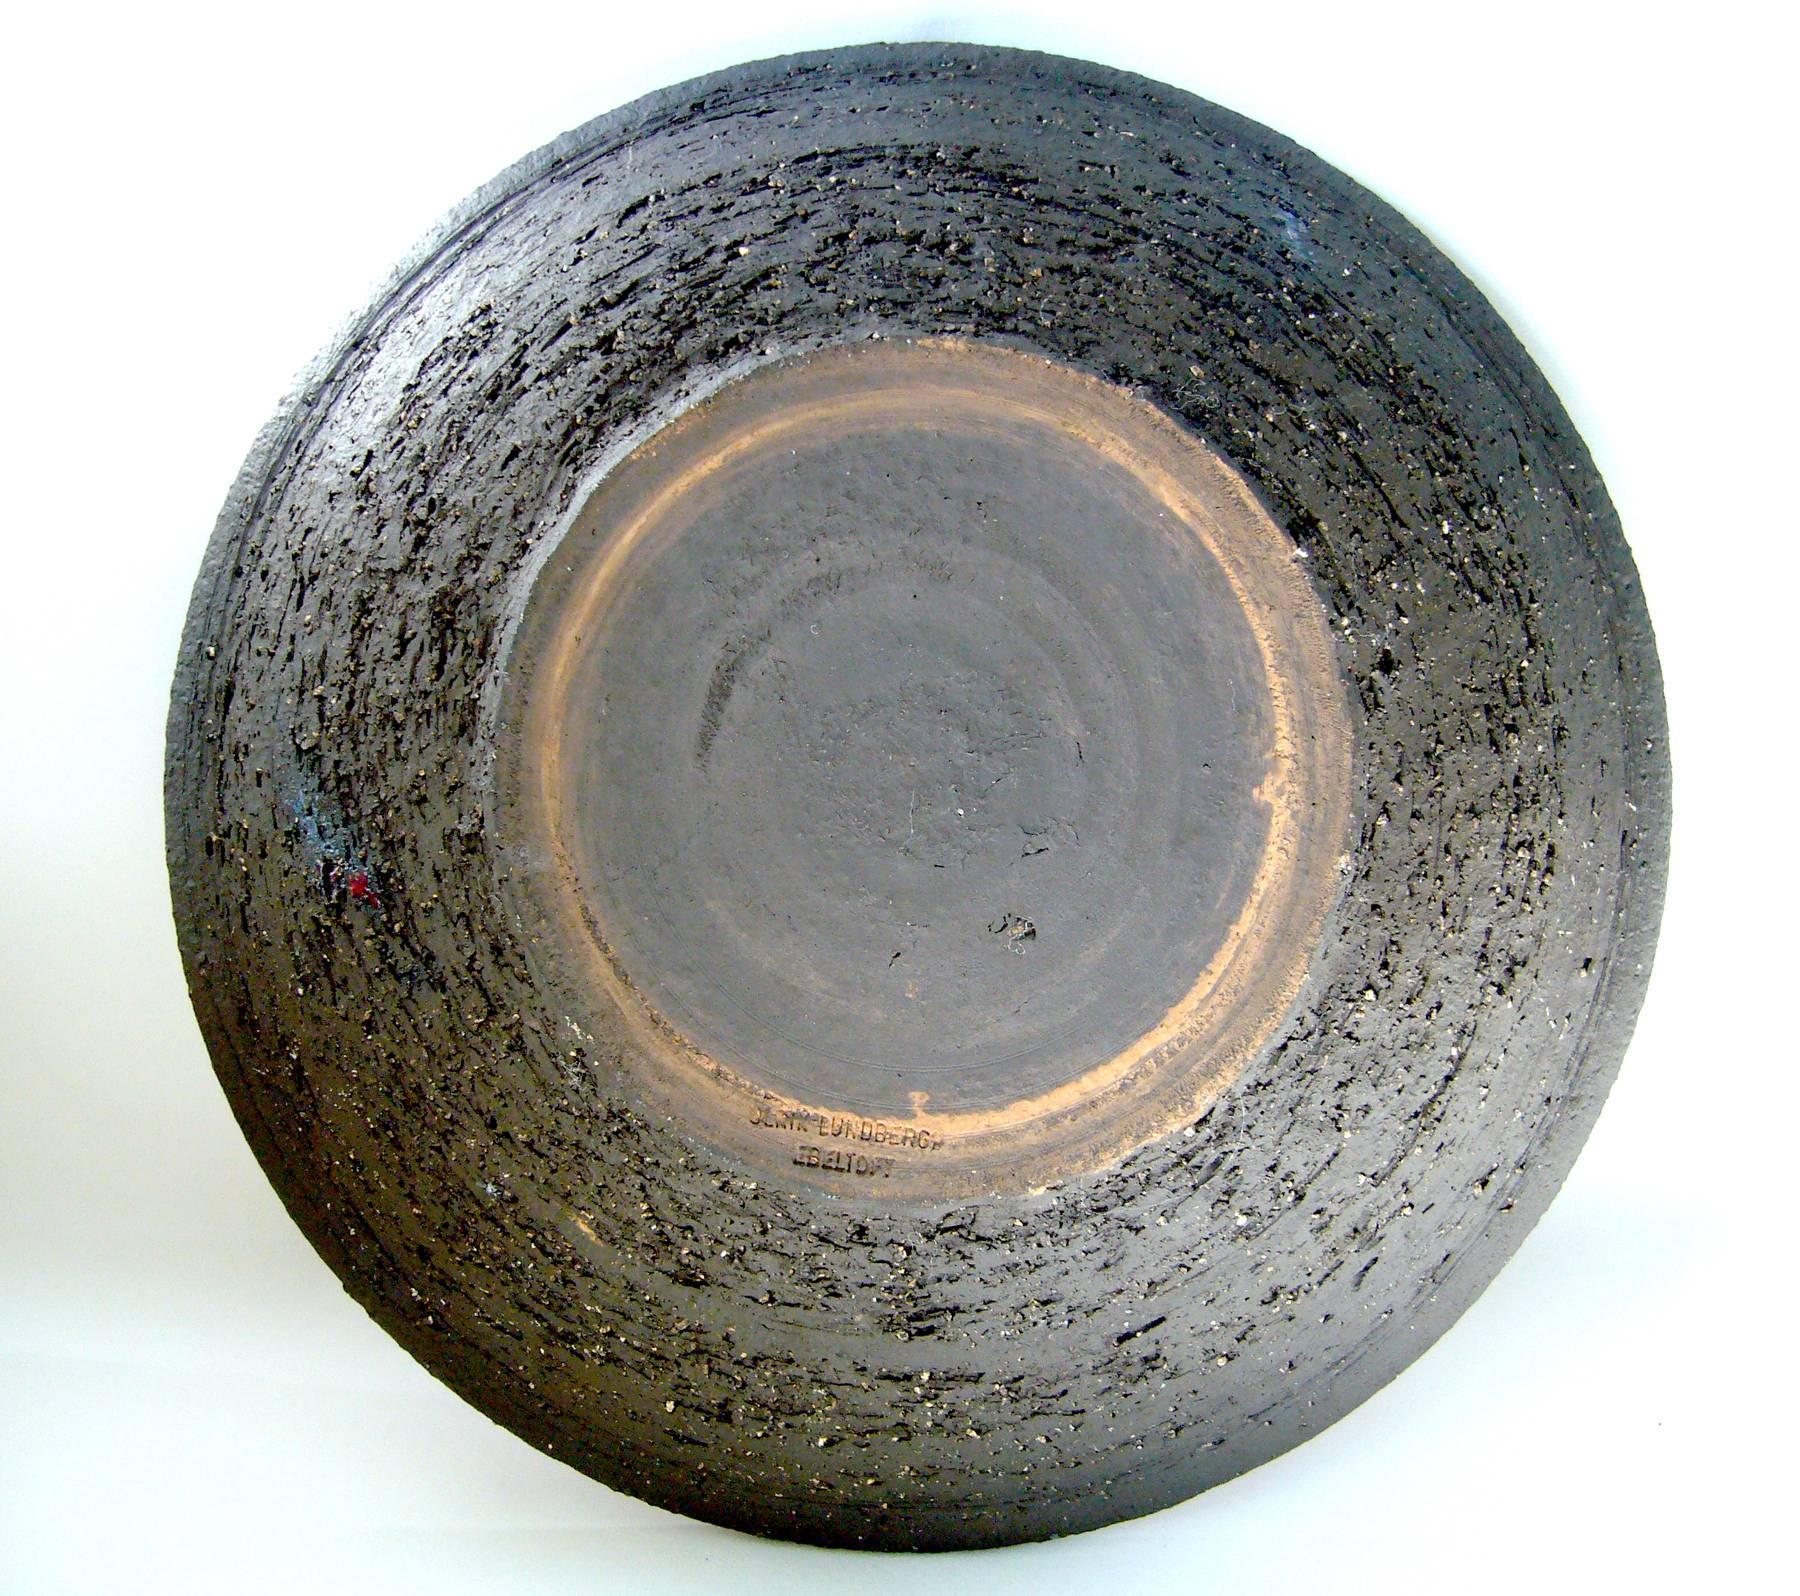 Mid-Century Modernist ceramic charger created by Ulrik Lundbergh of Ebeltoft, Denmark. Platter measures 12.5